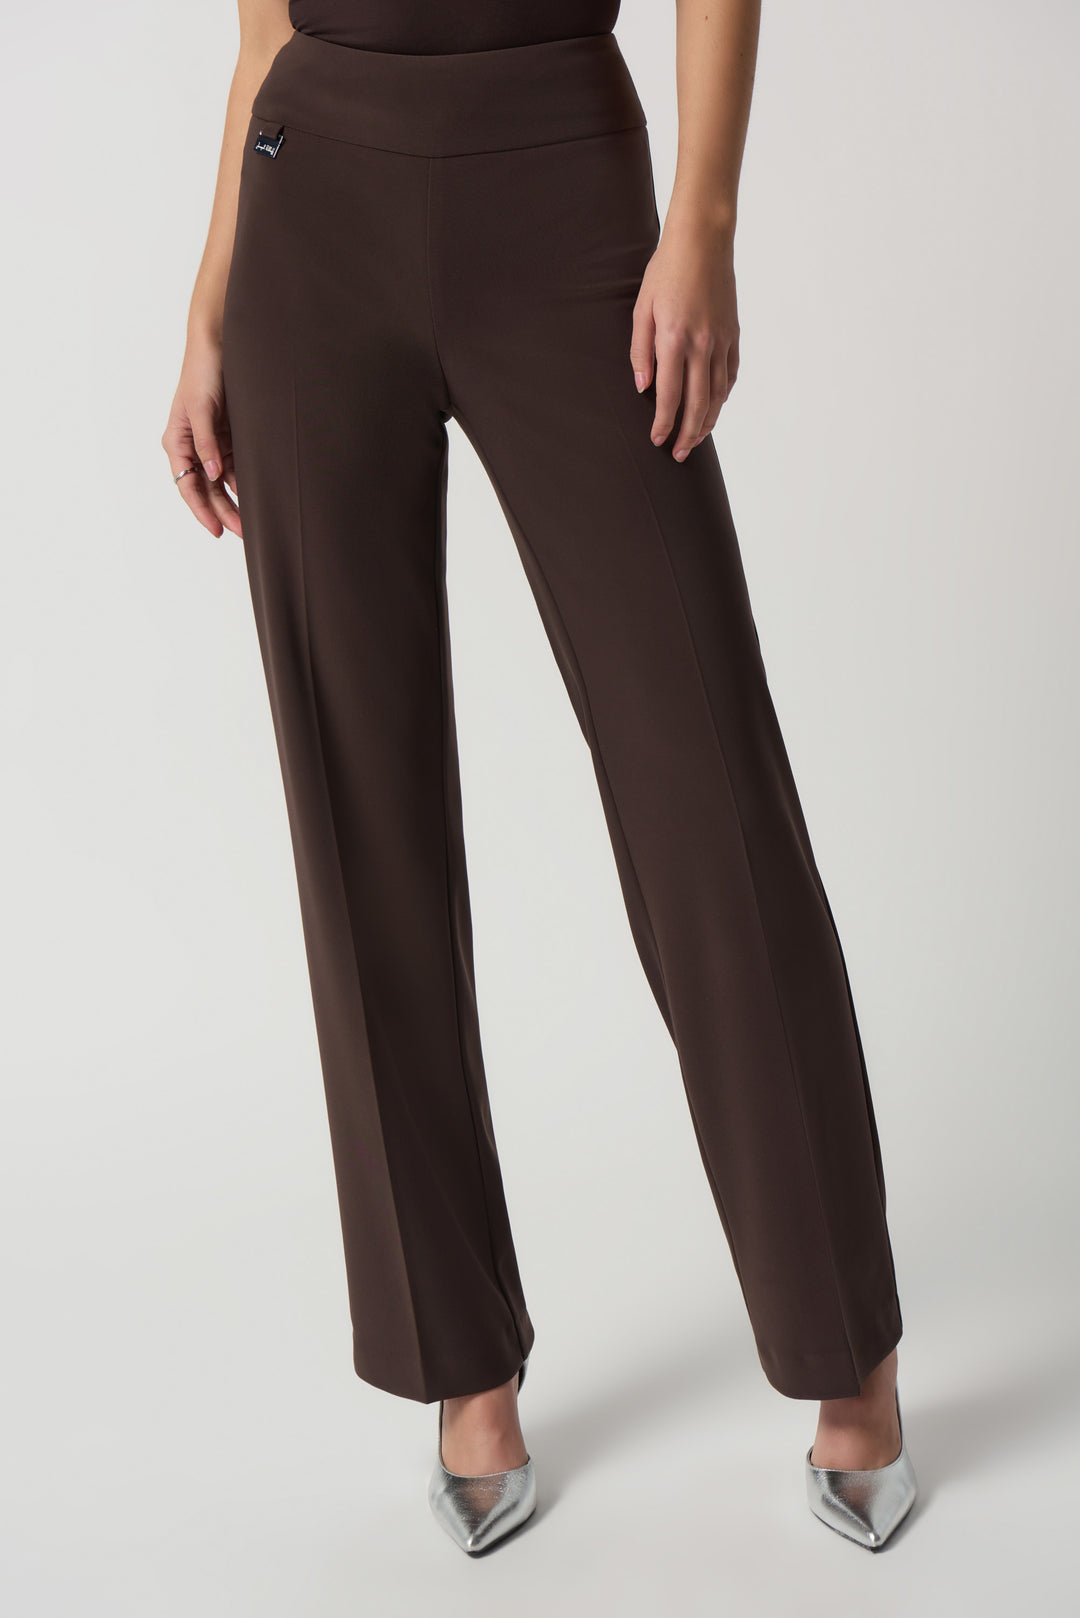 Joseph Ribkoff Fall 2023 women's business casual wide leg flared dress pants - front